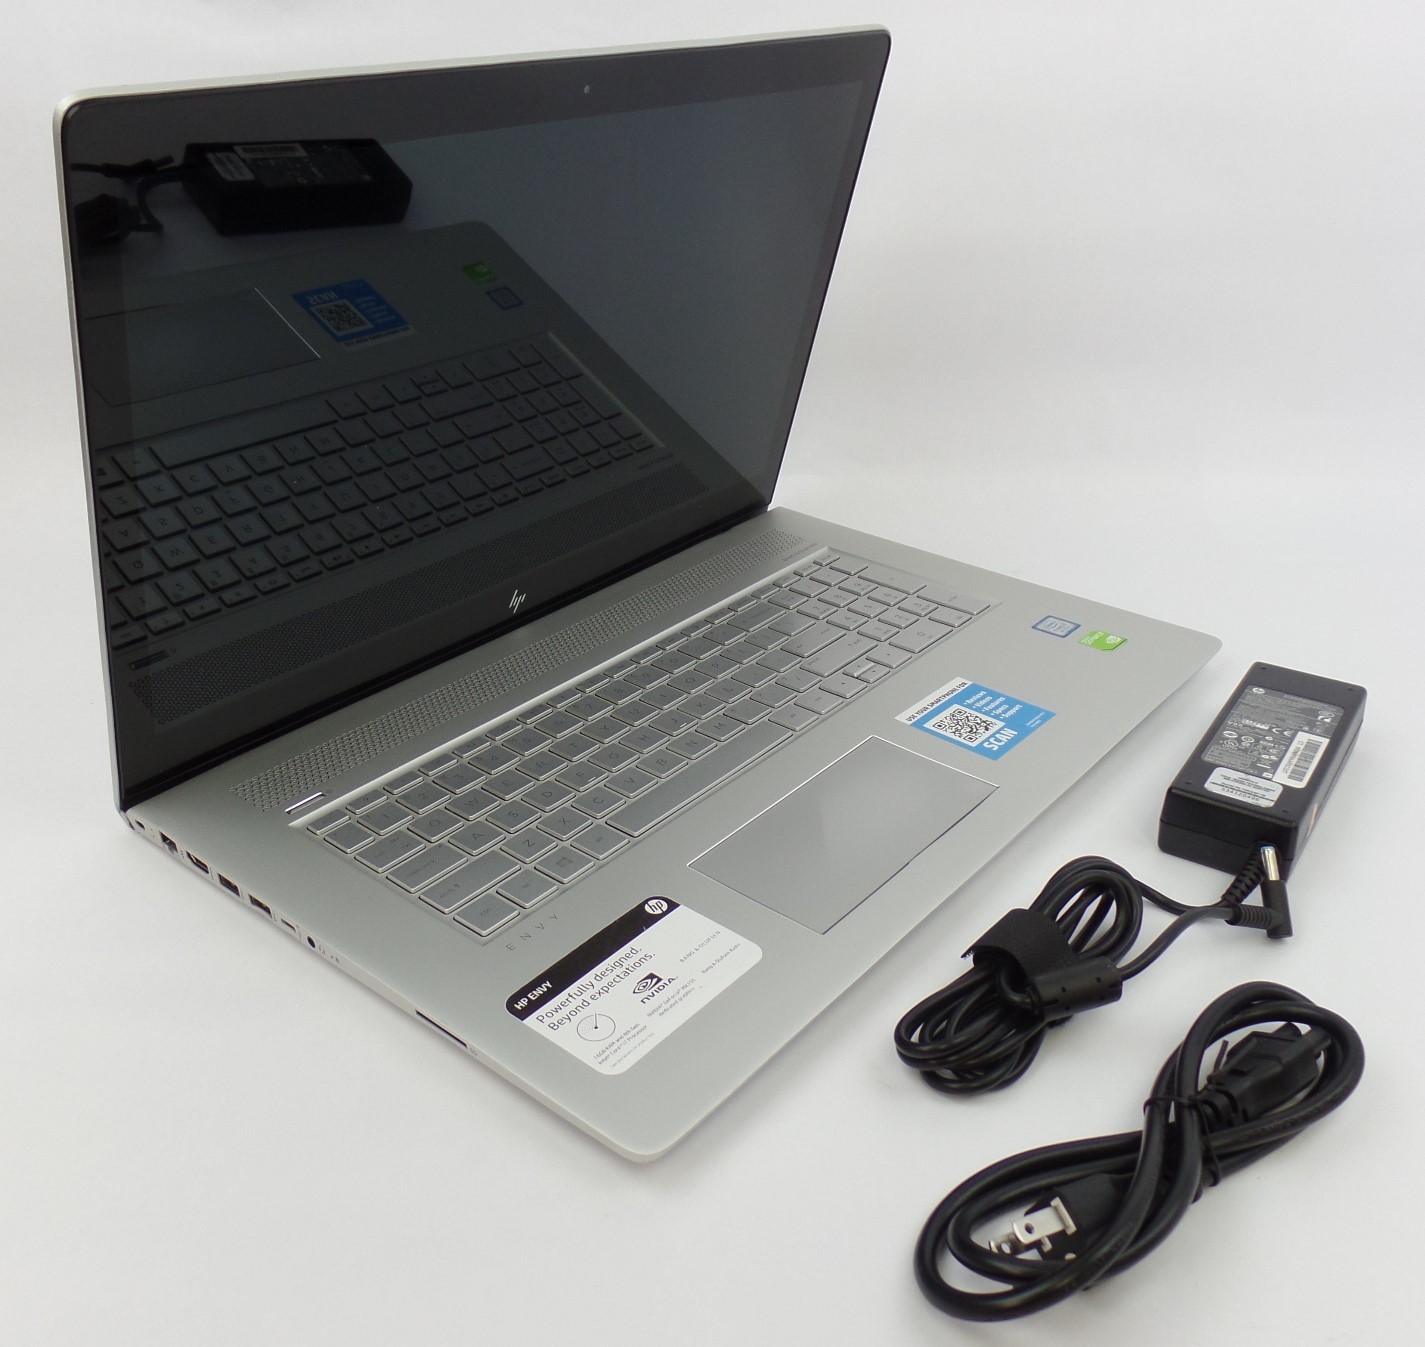 HP ENVY 17m-ae111dx 17.3" FHD Touch i7-8550U 16GB 1TB MX150 W10H Laptop - Dents